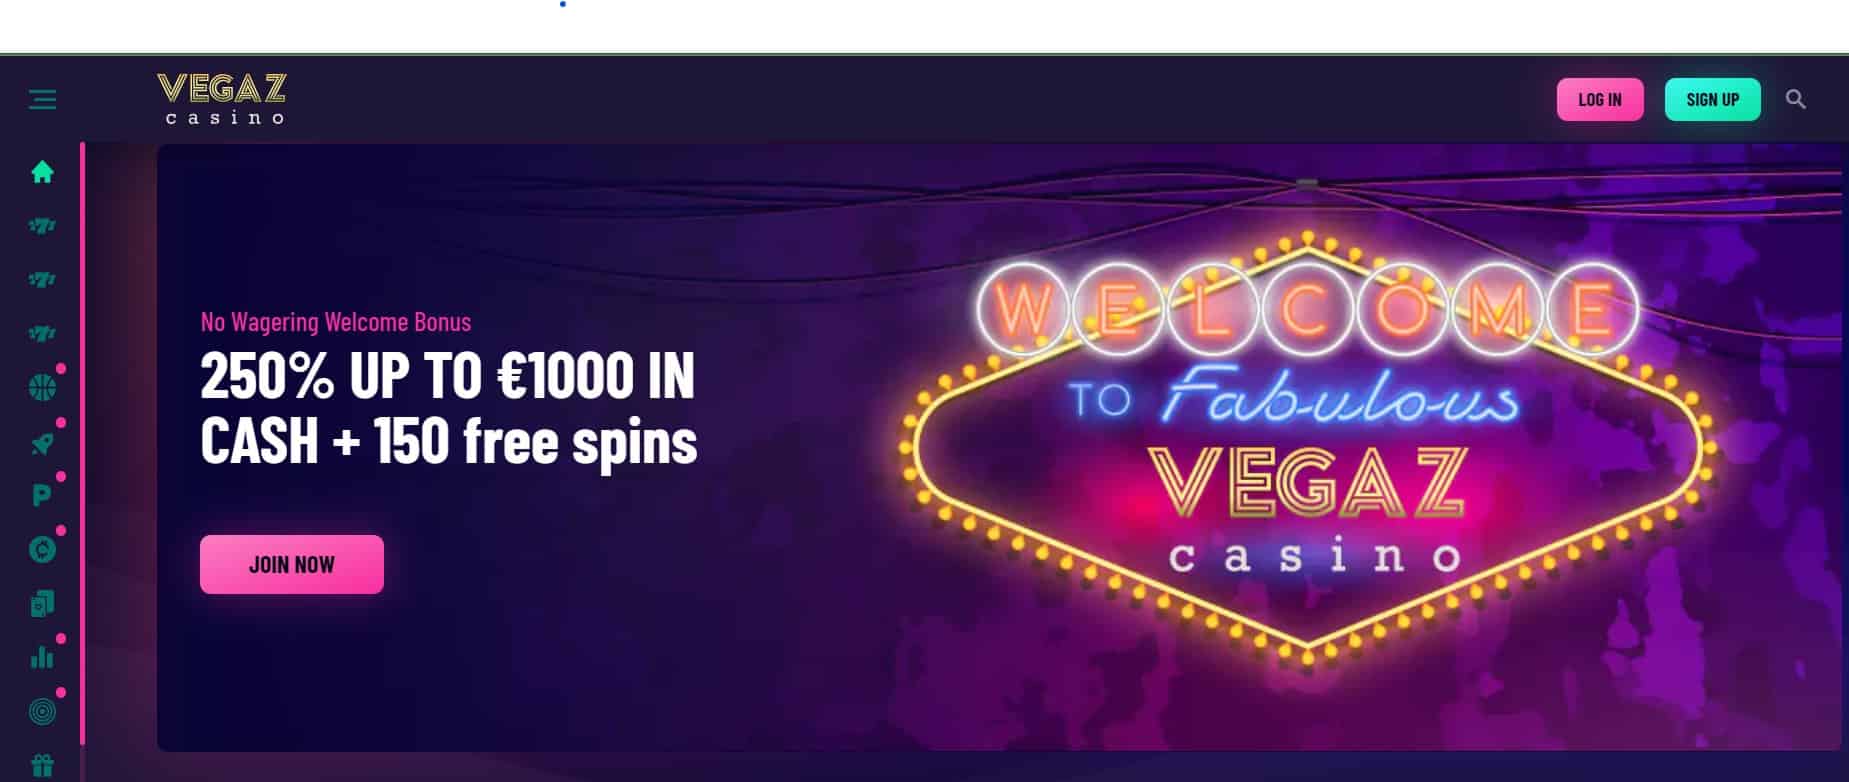 Vegaz casino pagina